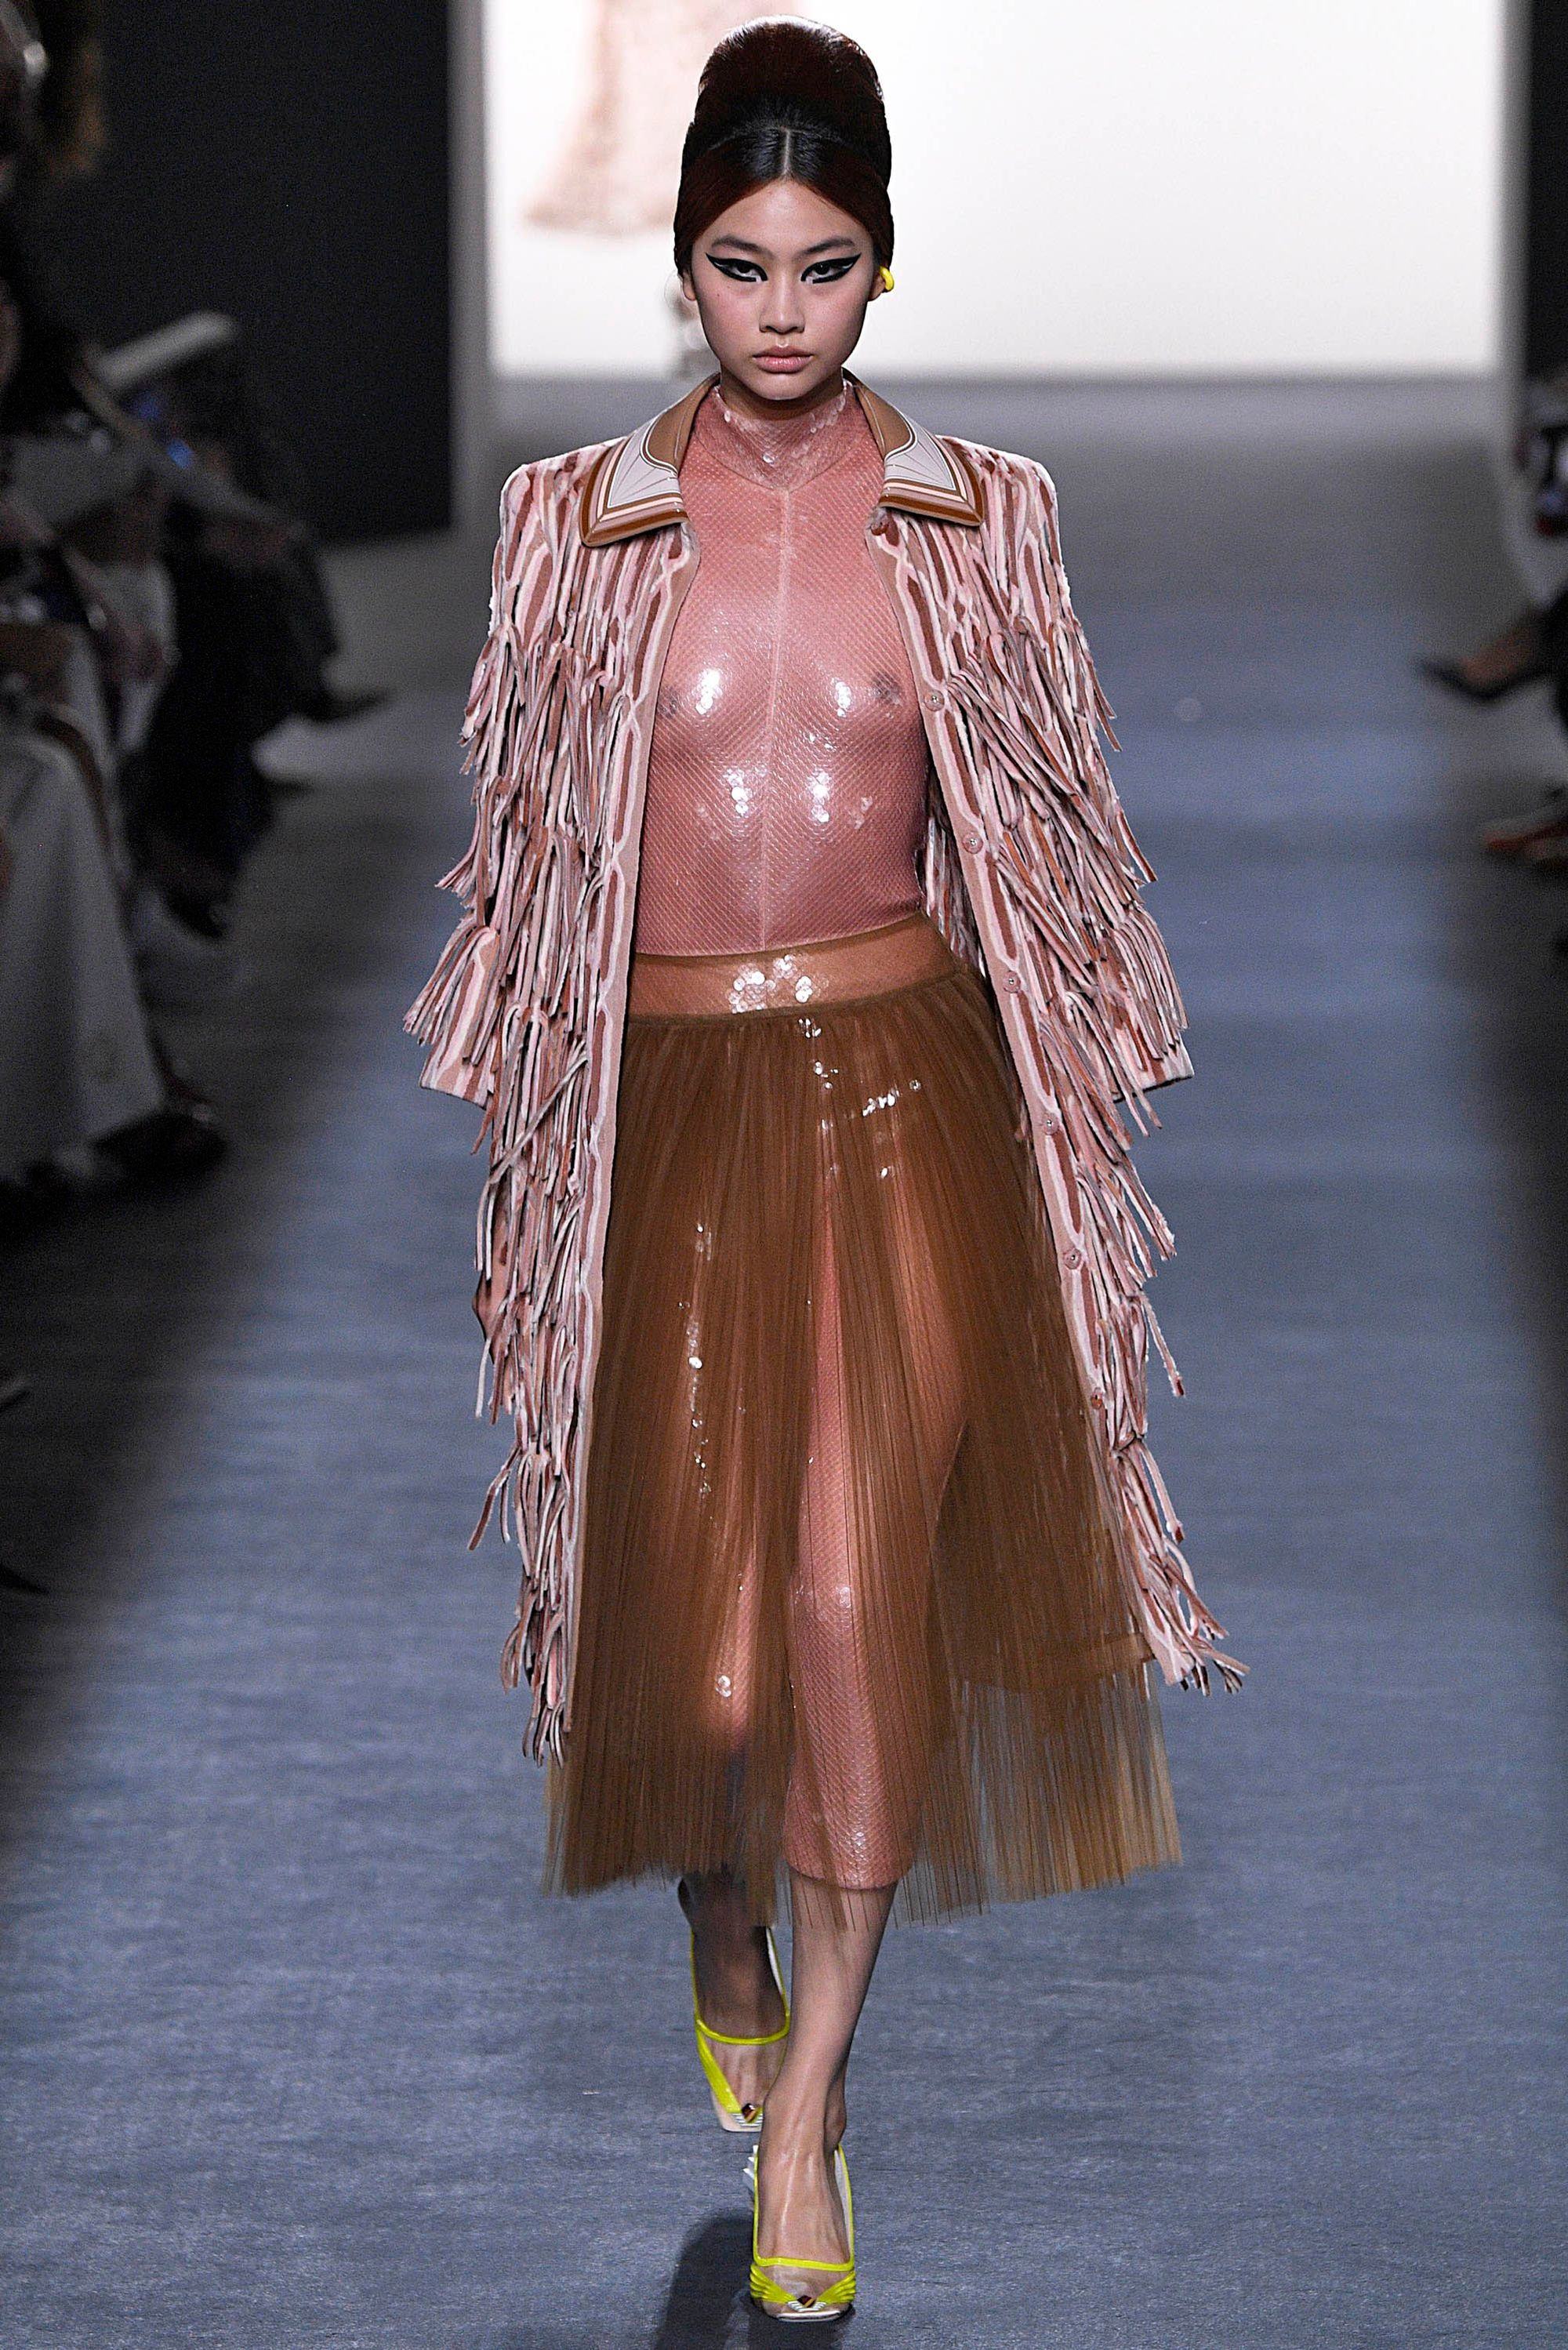 HoYeon Jung walks the runway during the Louis Vuitton